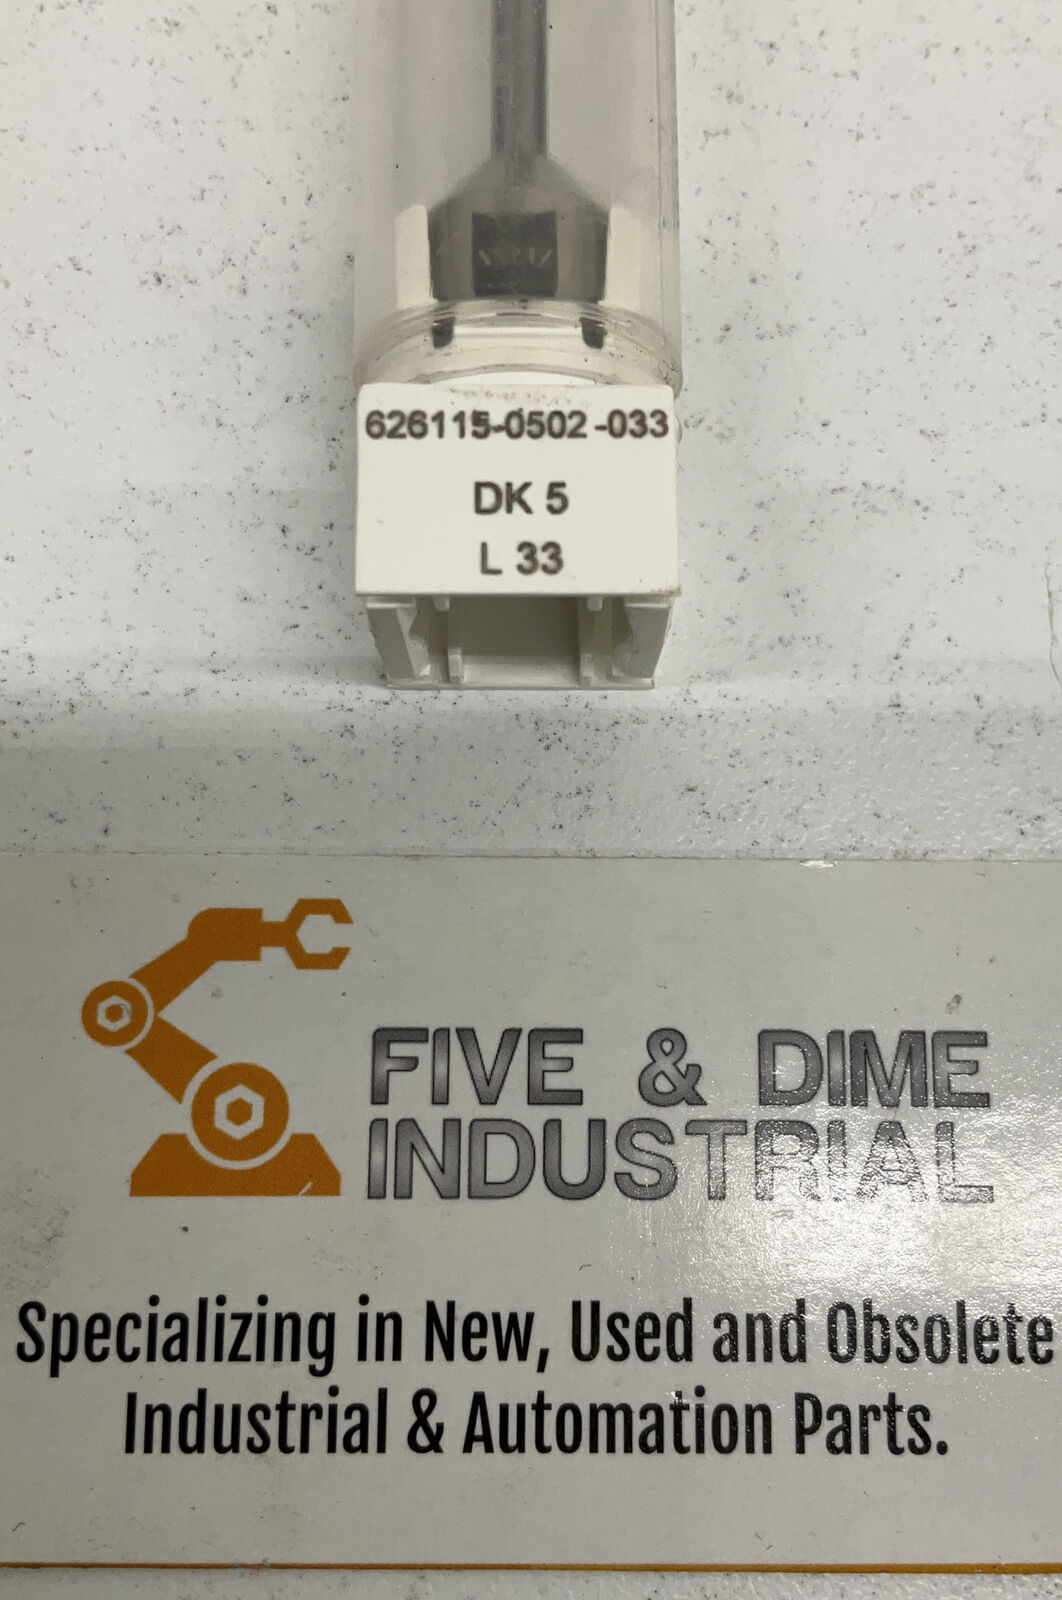 Zeiss DK-5 Carbide Tip Probe 626115-0502-033 L-33  (BL216) - 0